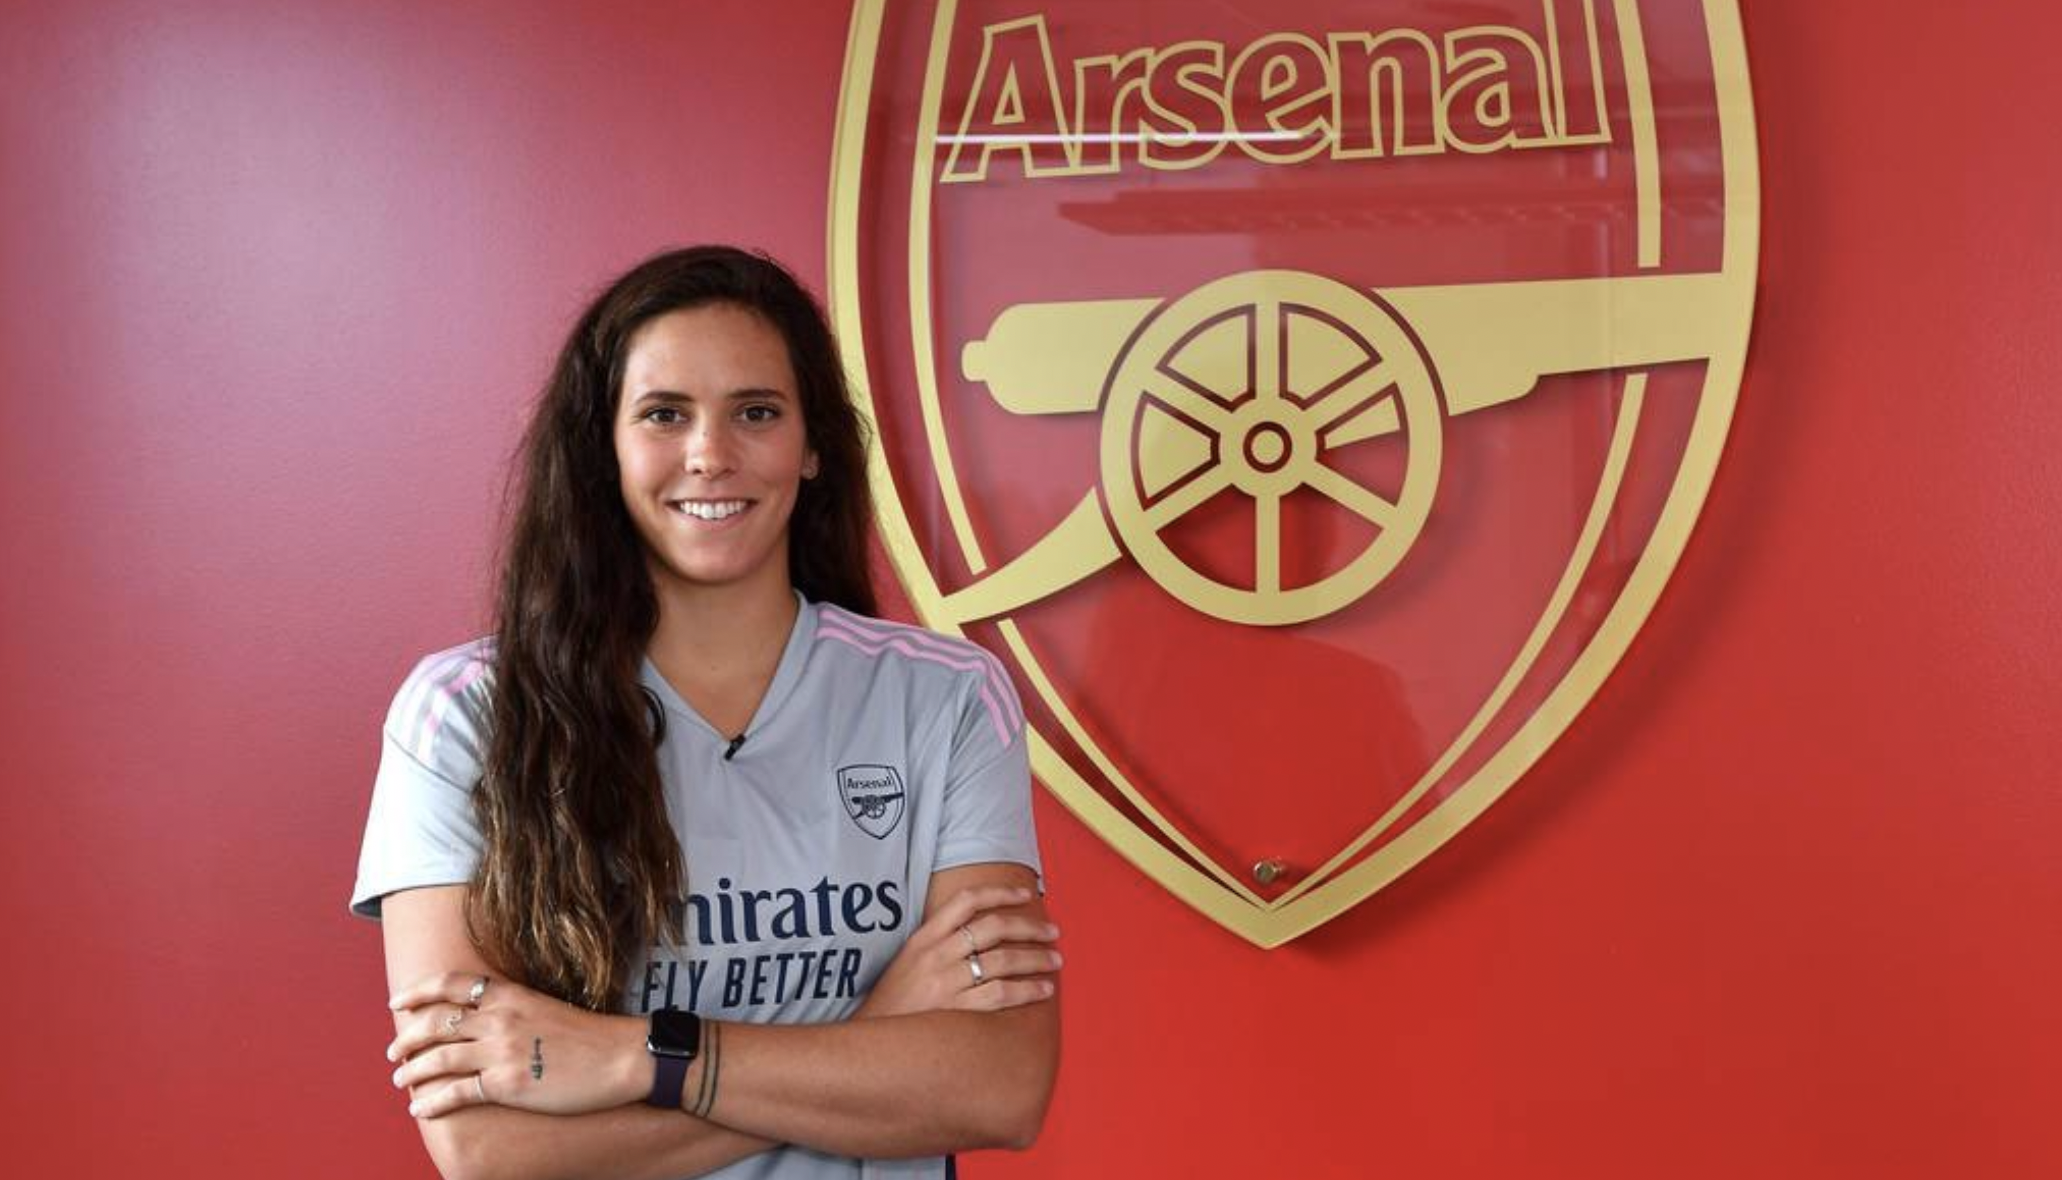 American goalkeeper joins Arsenal Women